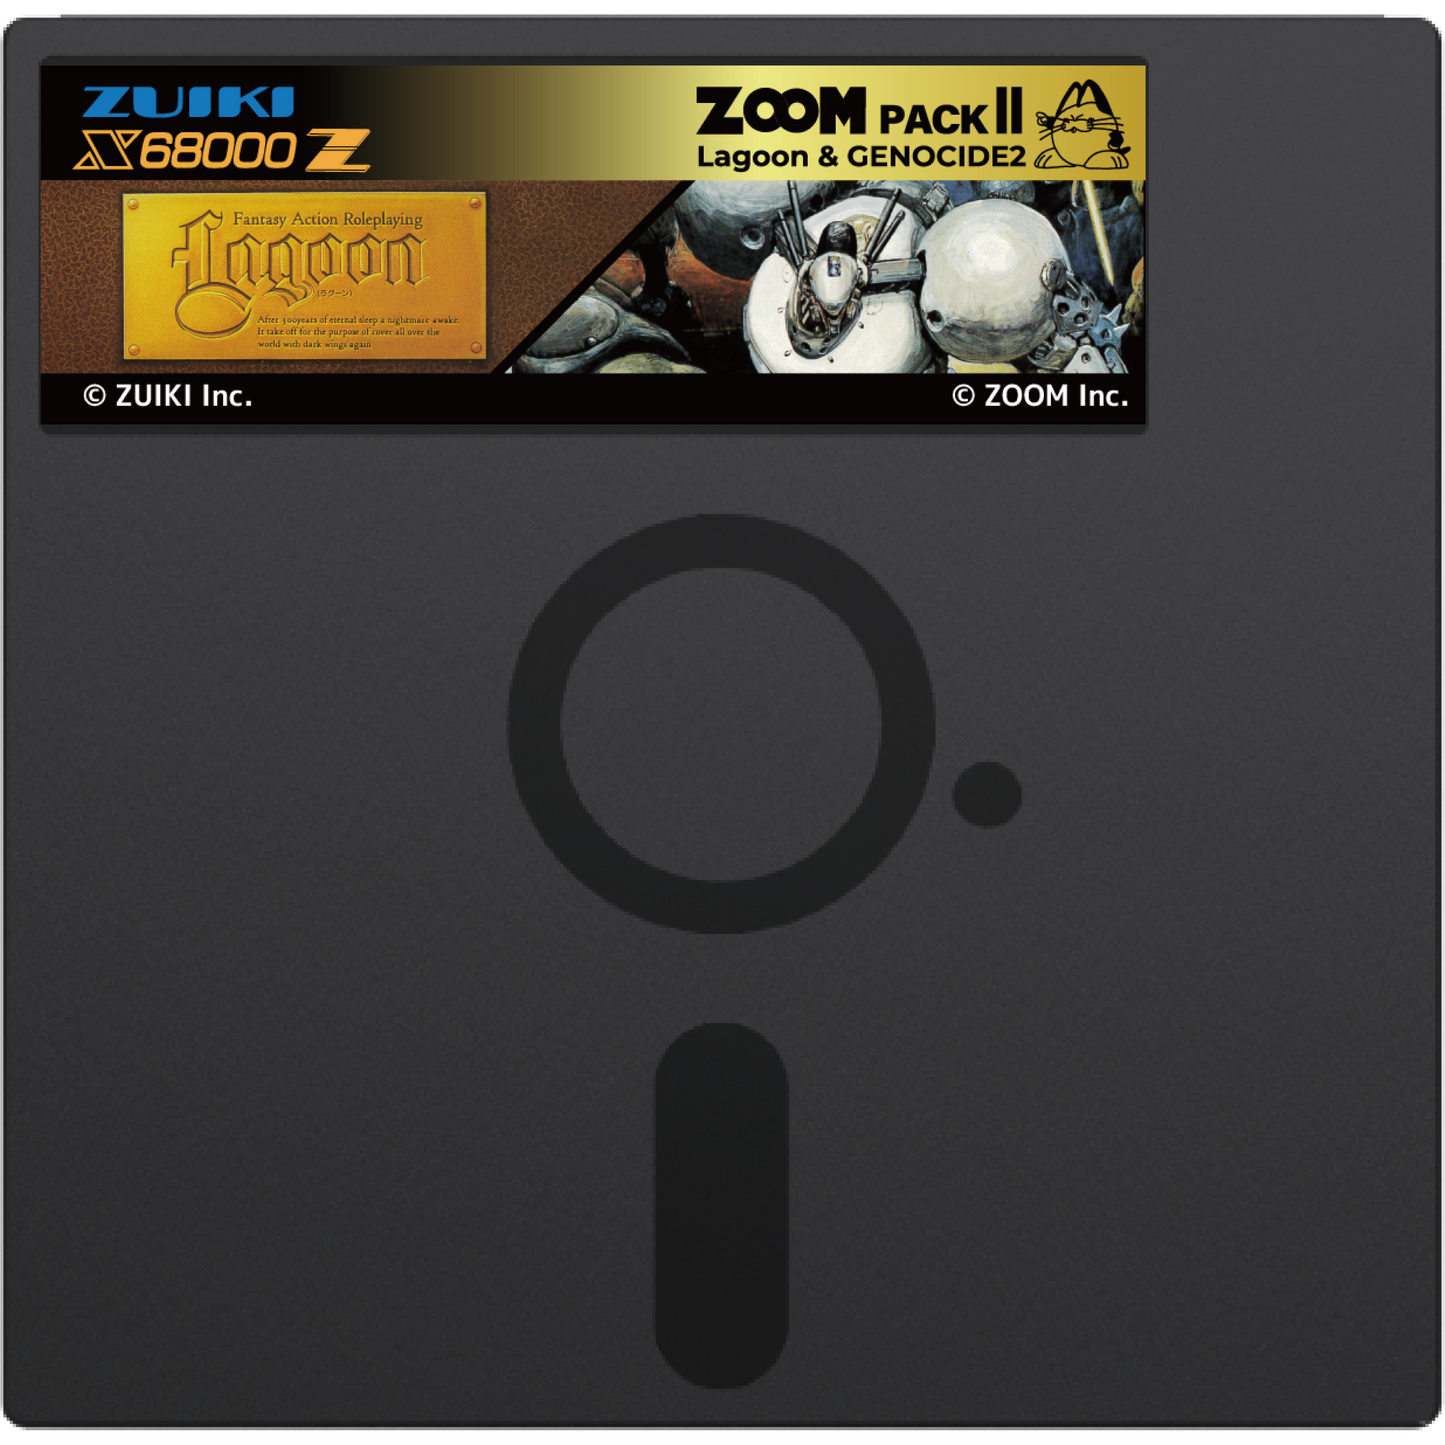 ZUIKI X68000 Z Lagoon / Genocide 2 ZOOM PACK Ⅱ Japan NEW